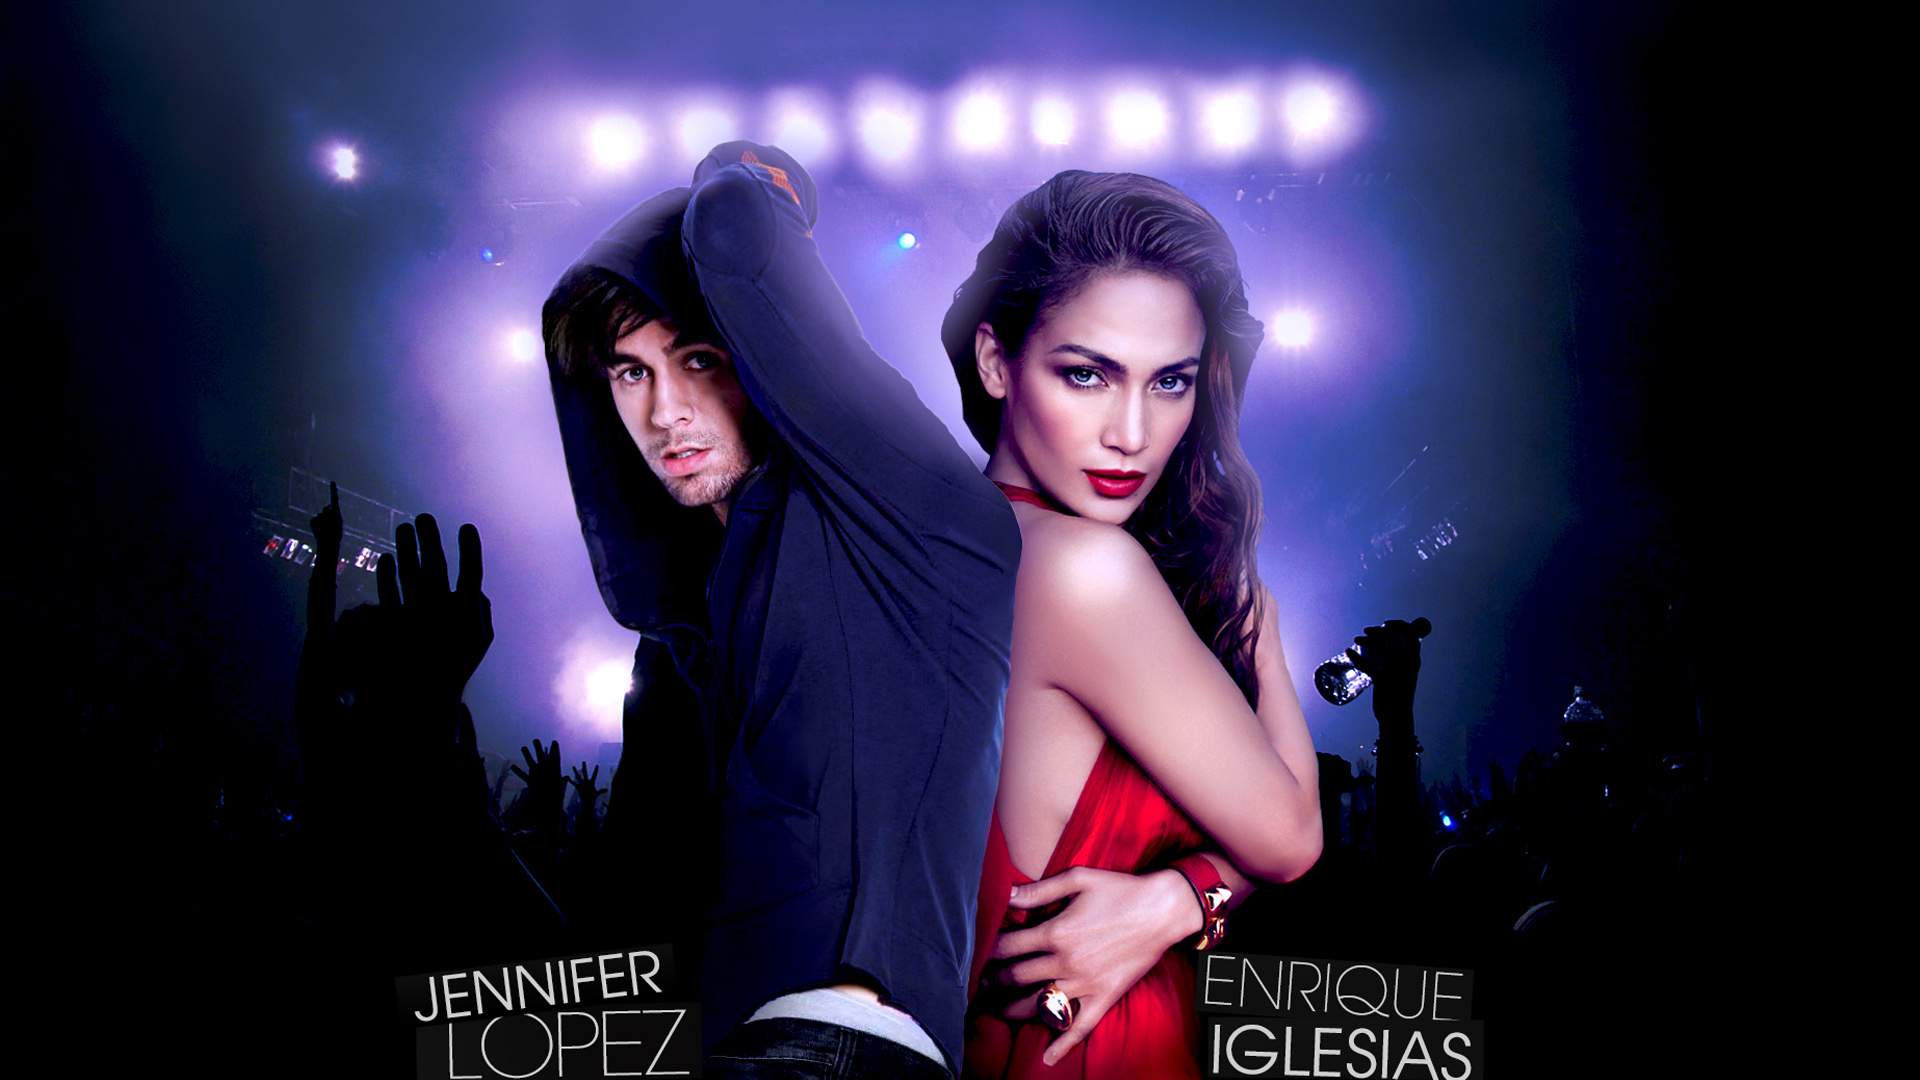 Jennifer Lopez Enrique Iglesias Tour